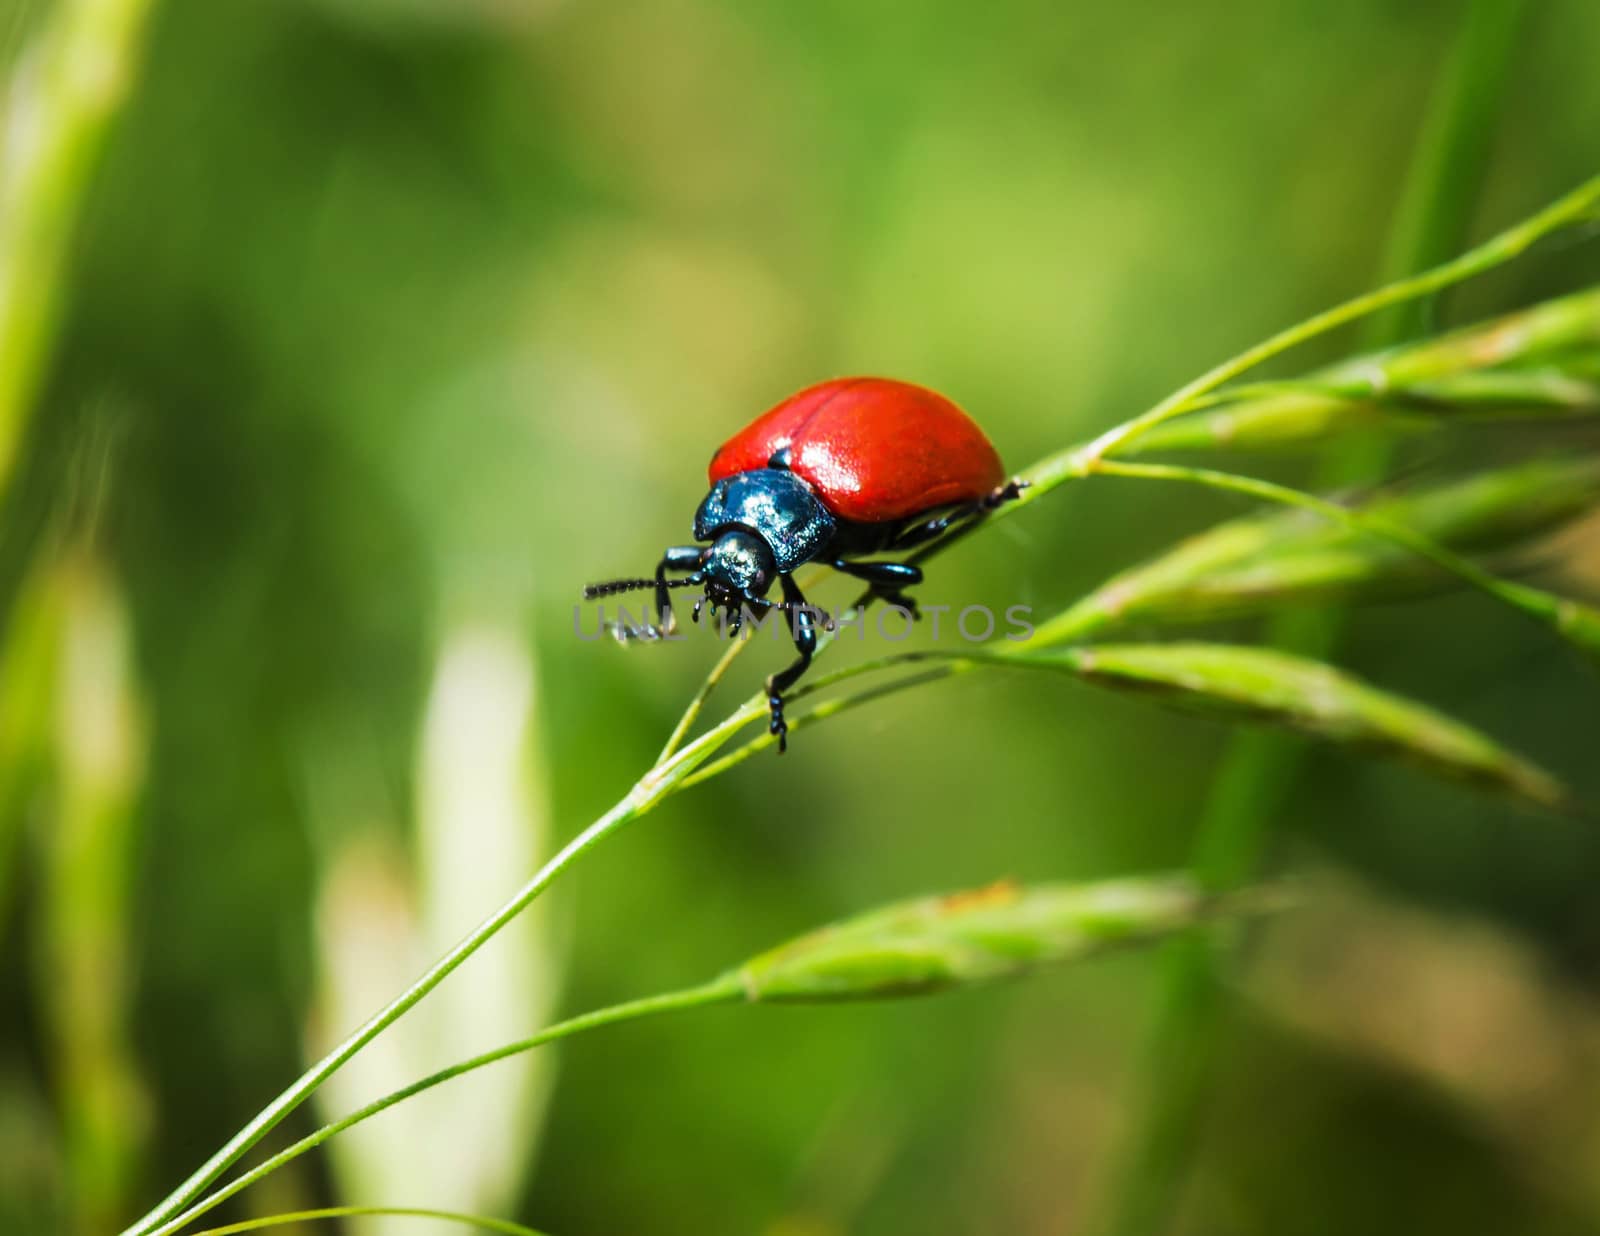 Red bug on a blade of grass  by oleg_zhukov